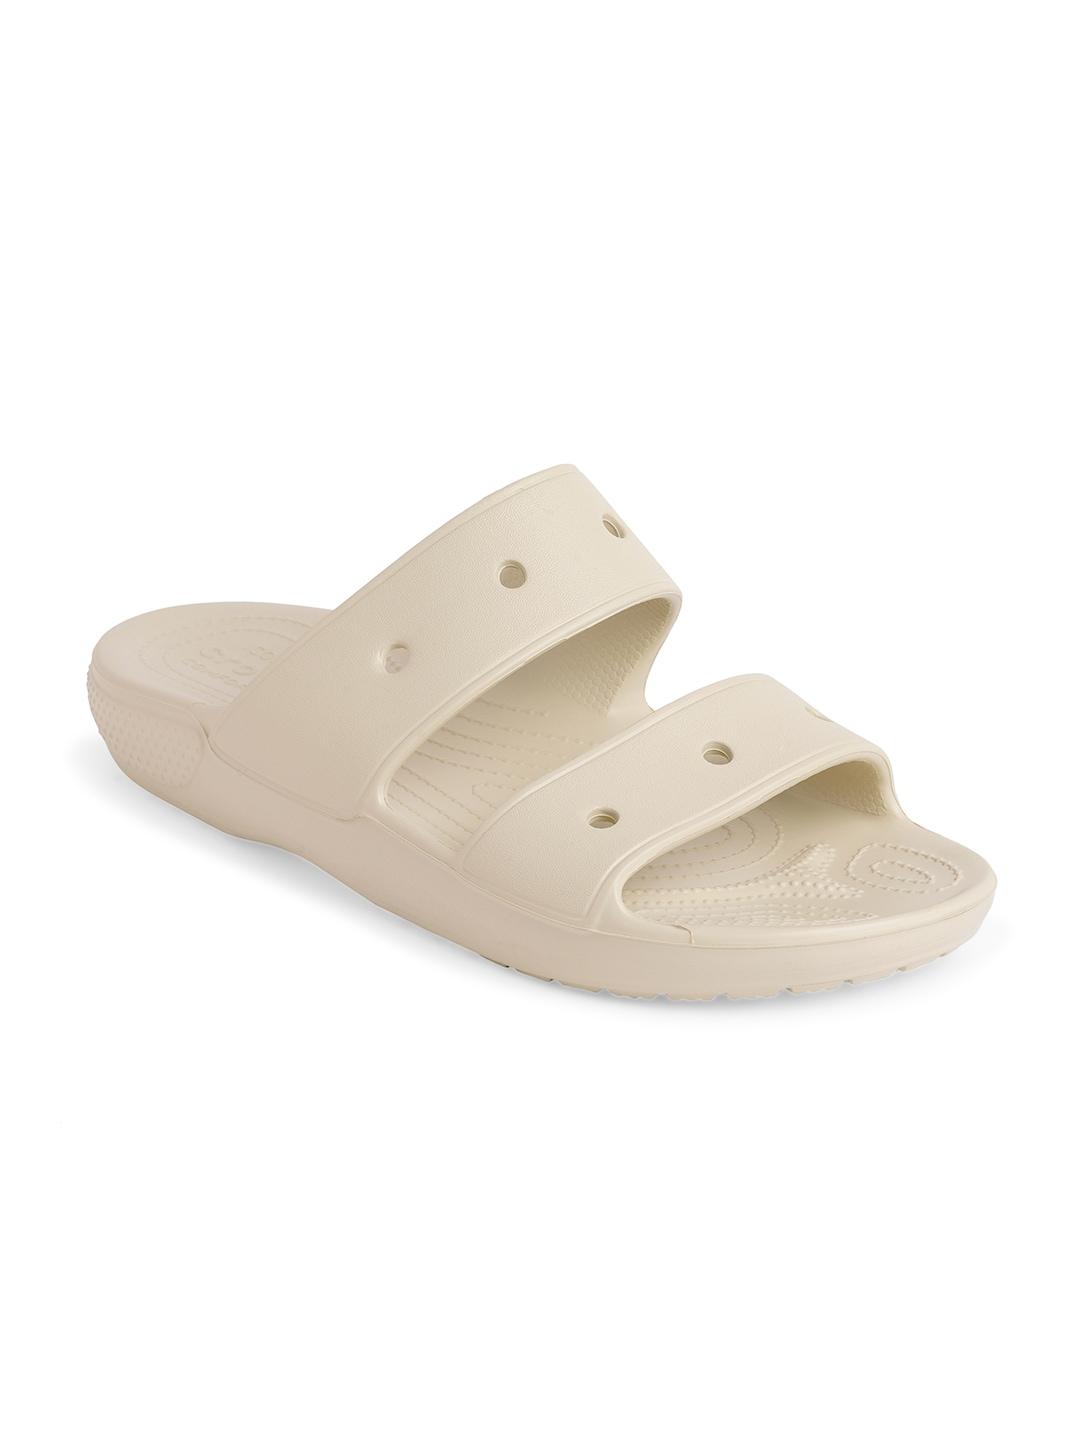 crocs-unisex-off-white-solid-comfort-sandals